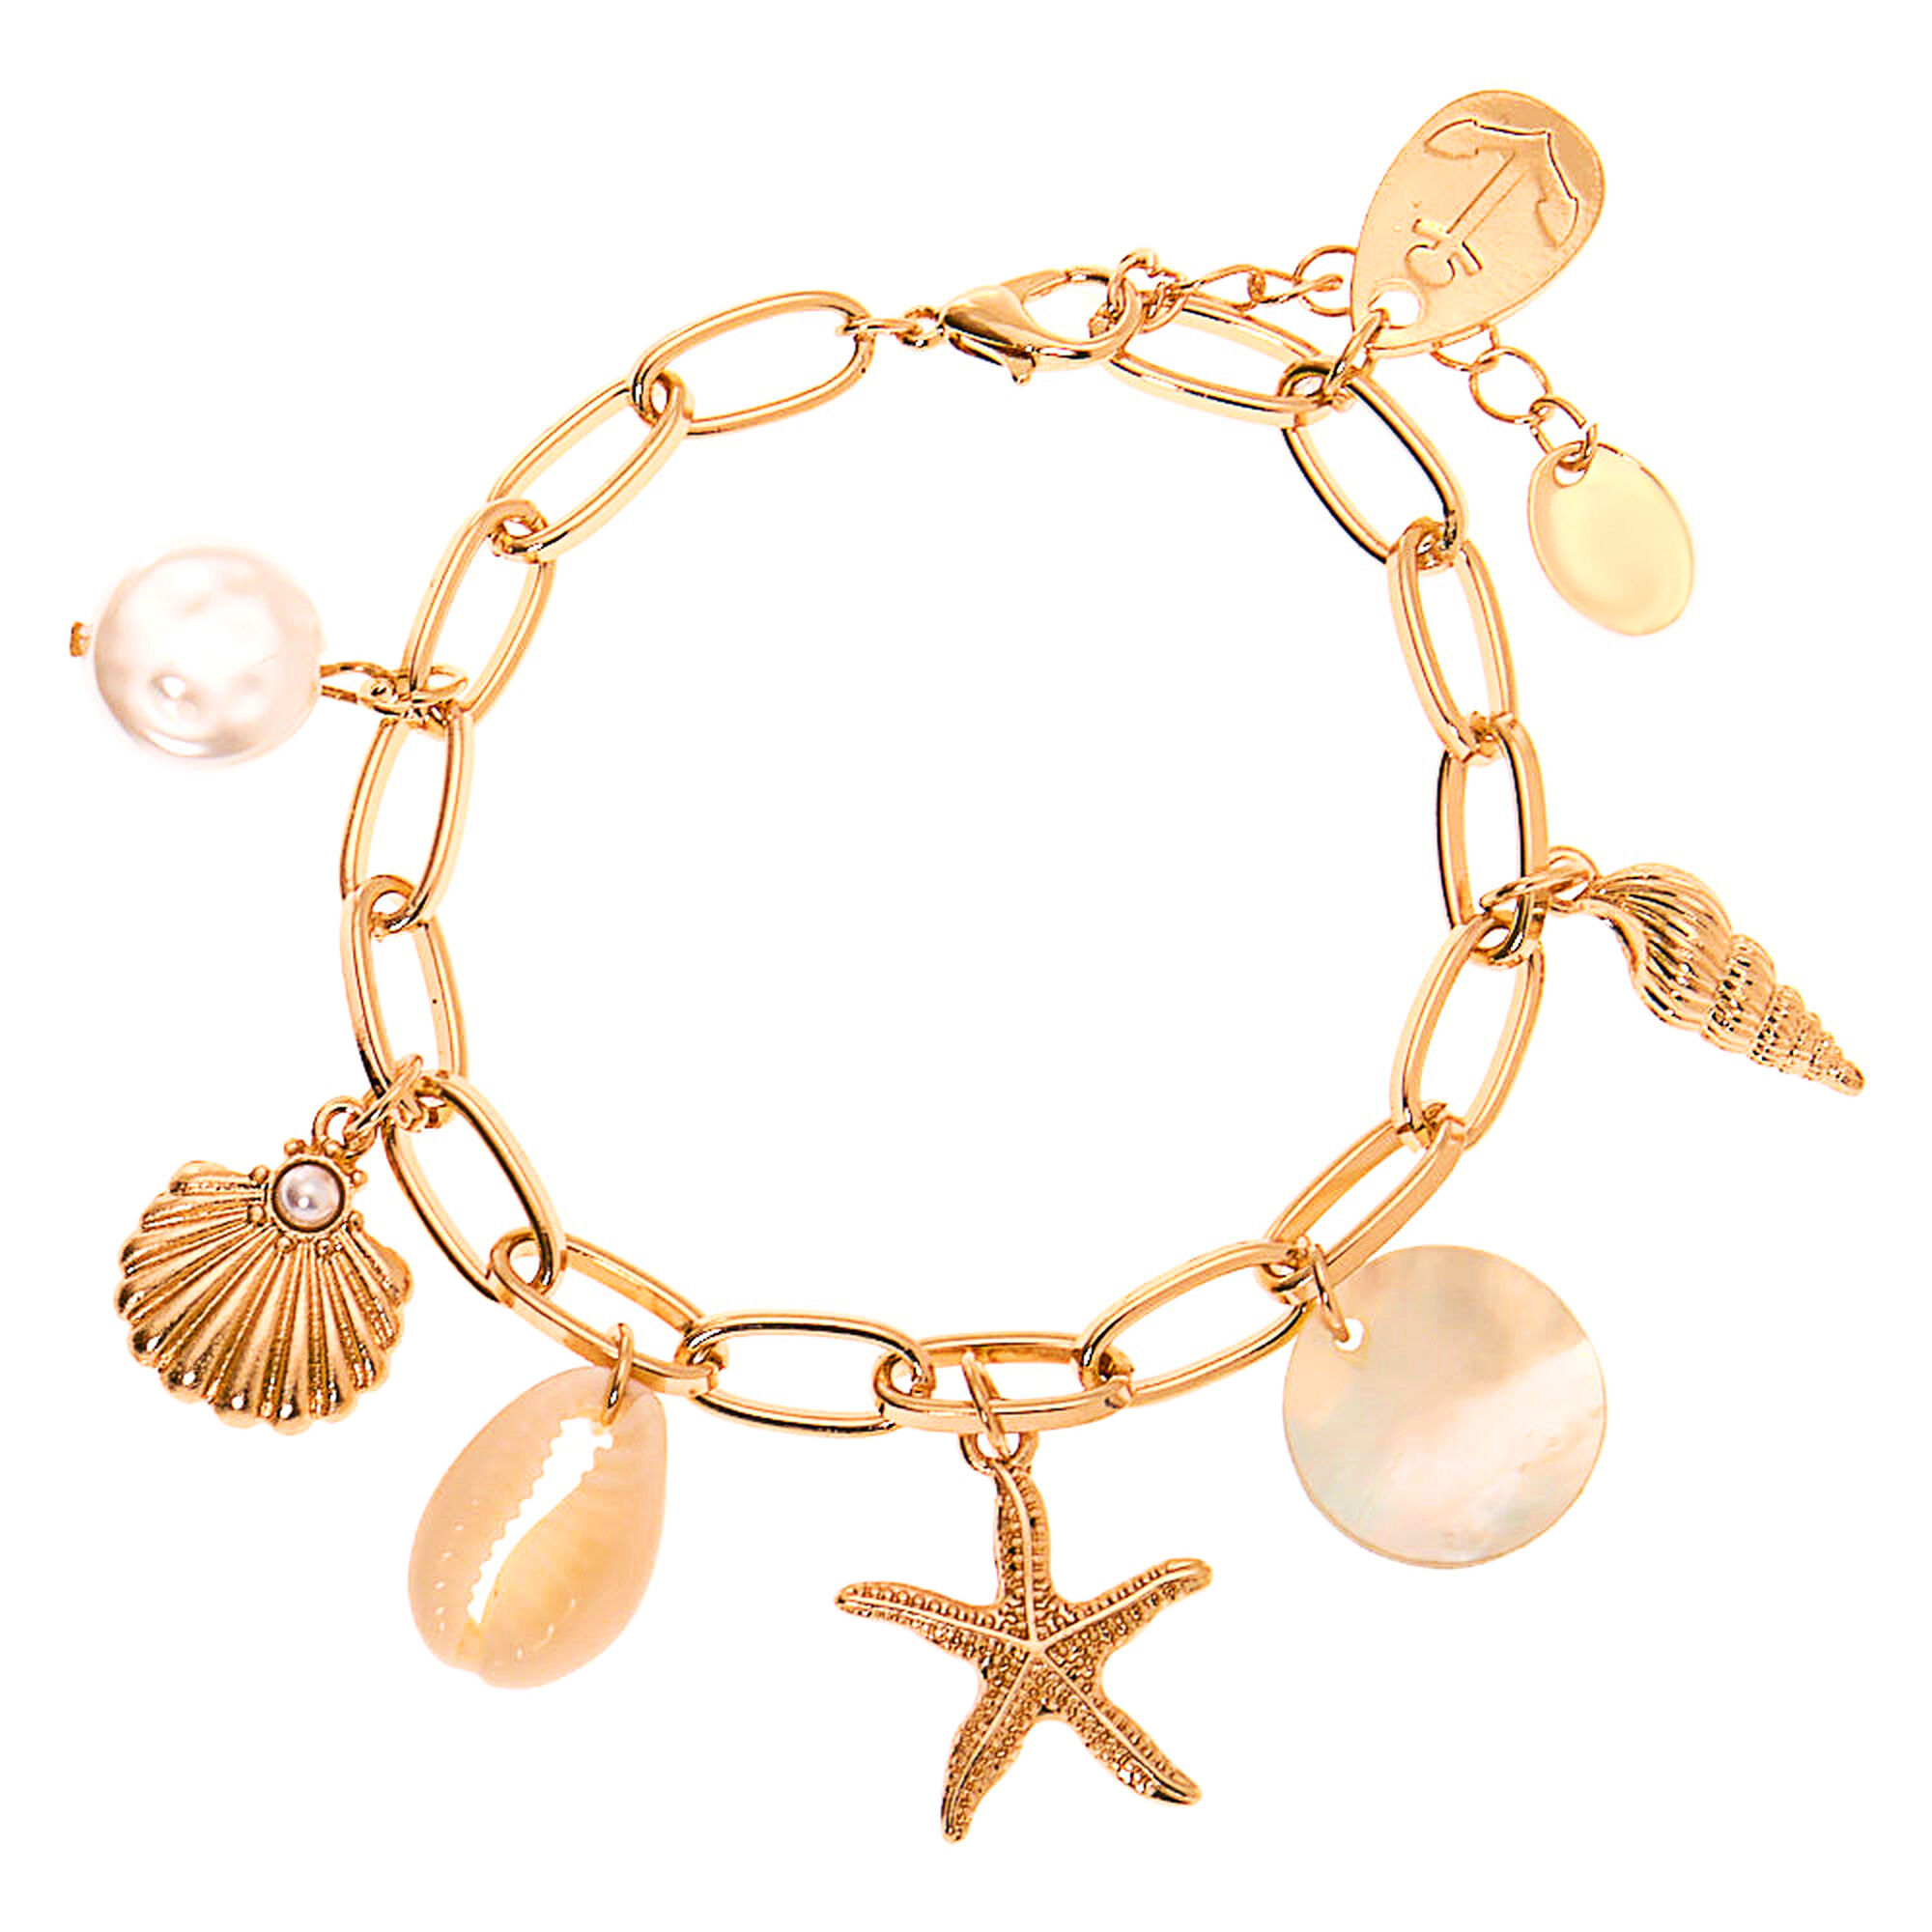 Chain Charm Bracelet Gold Charm Bracelet Gold and Black Bracelet Beach Bracelet Gold Starfish Charm Bracelet Starfish Bracelet